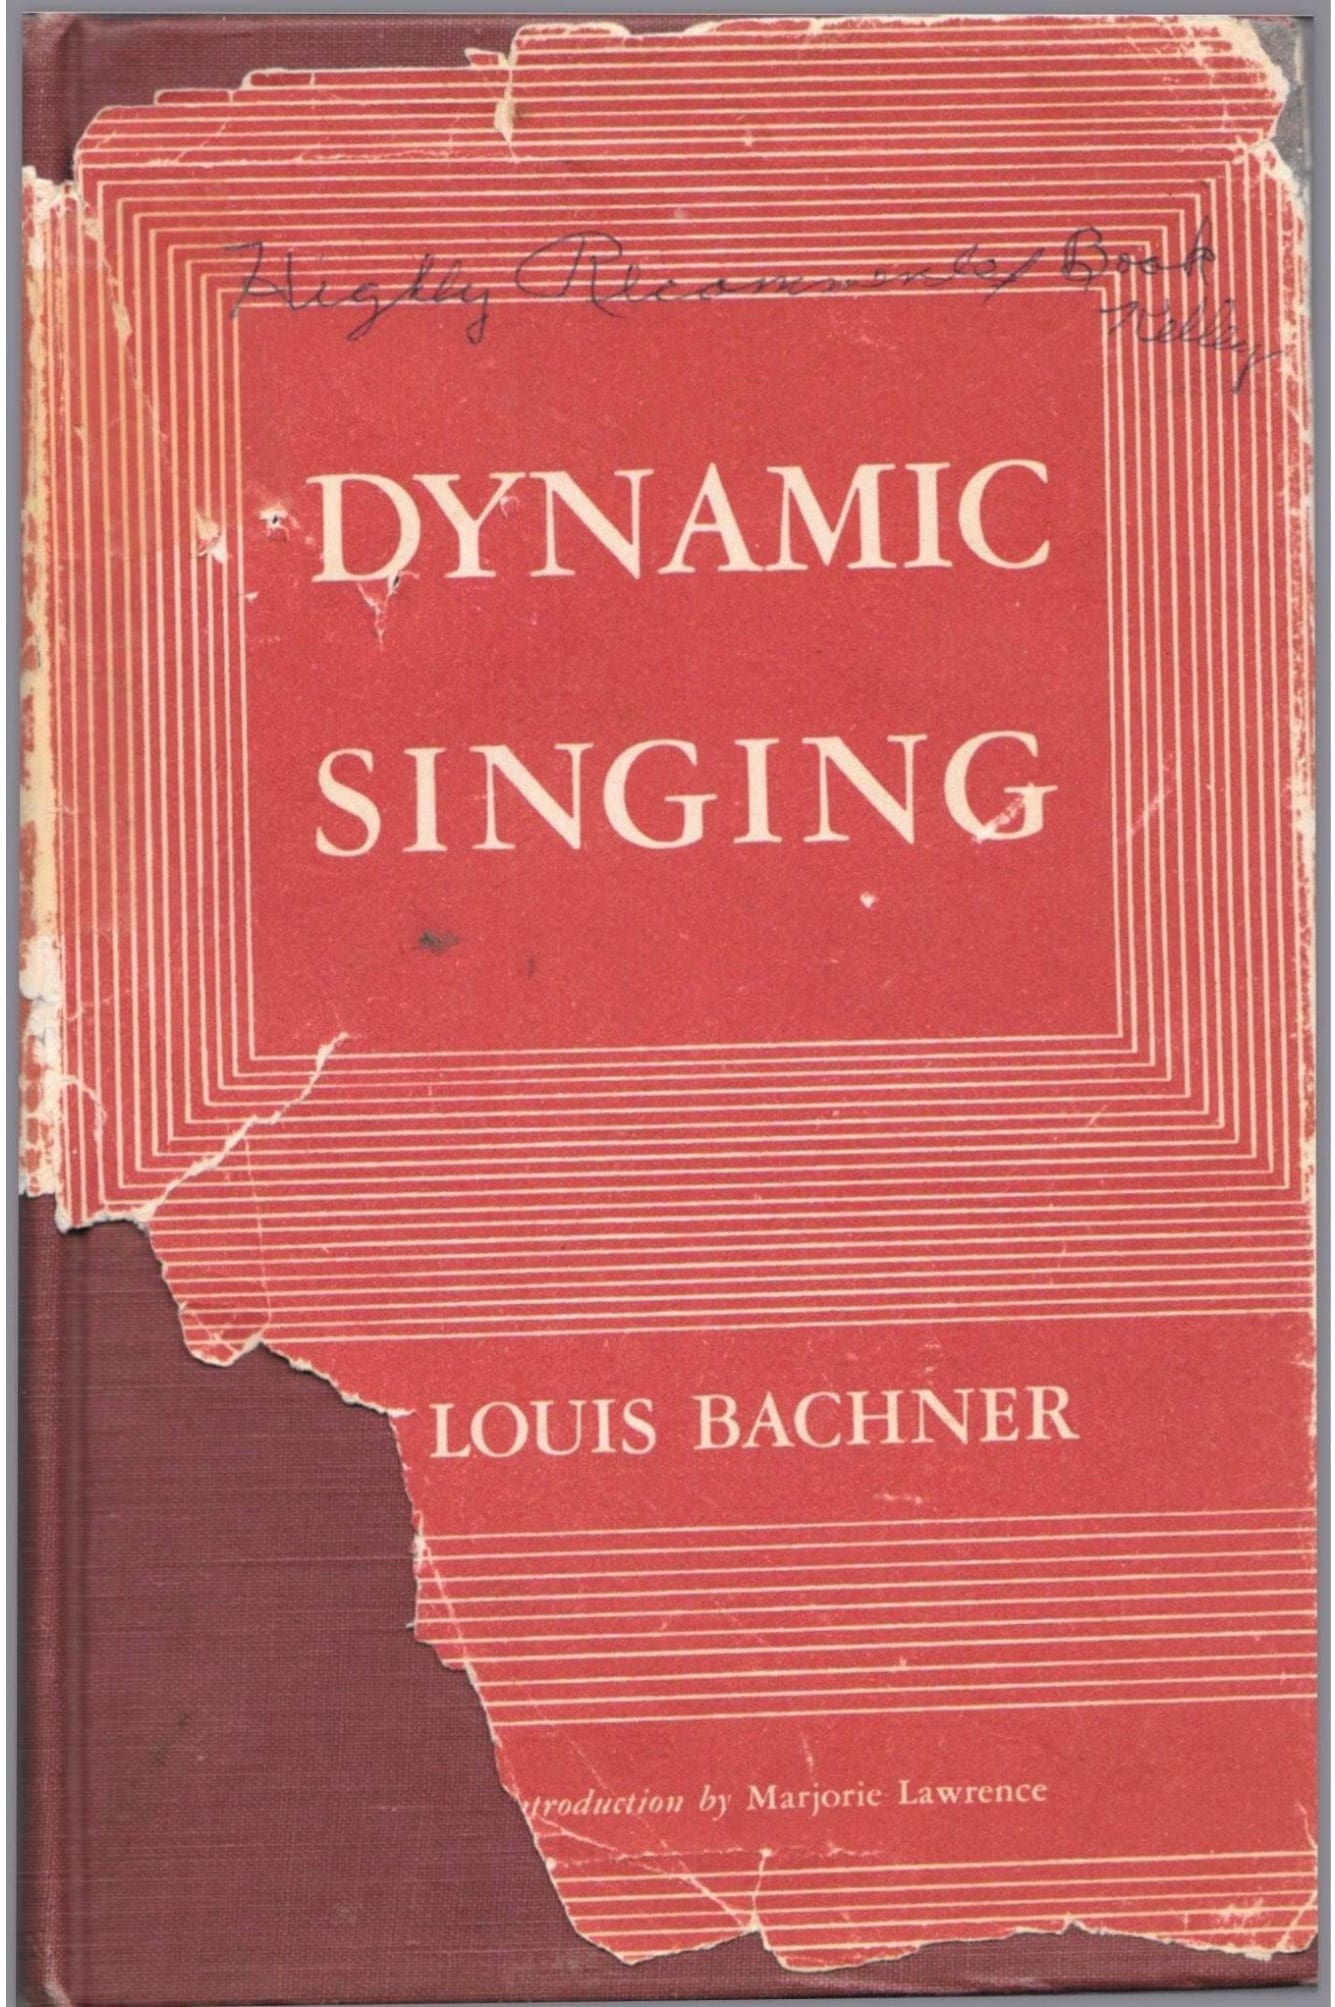 Dynamic Singing by Louis Bachner